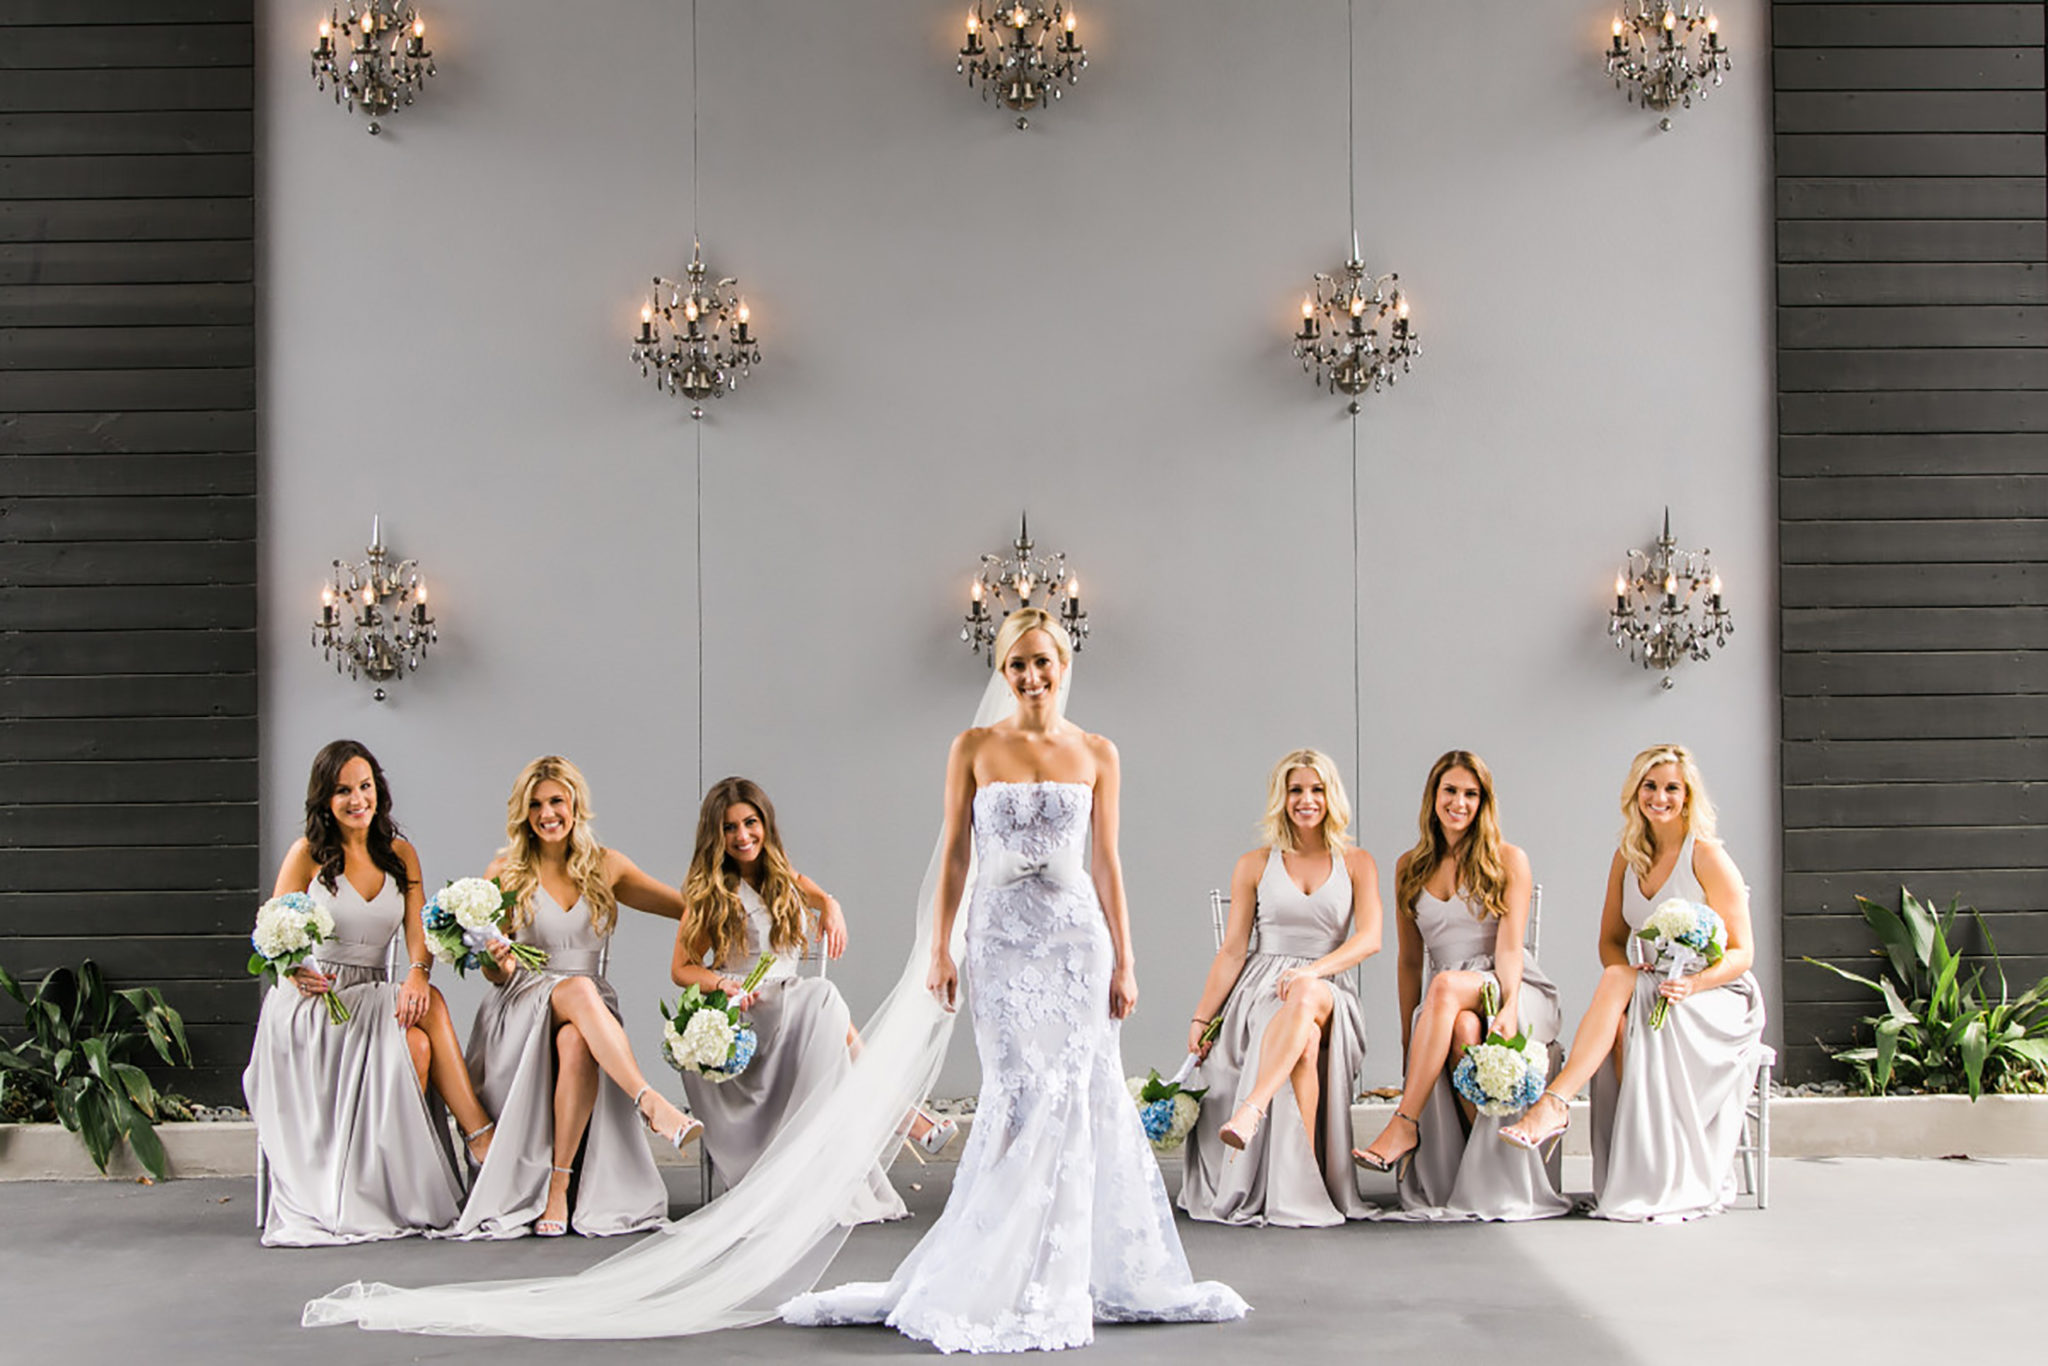 Luxury Weddings Planners: Lindsay Sims of TOAST Events